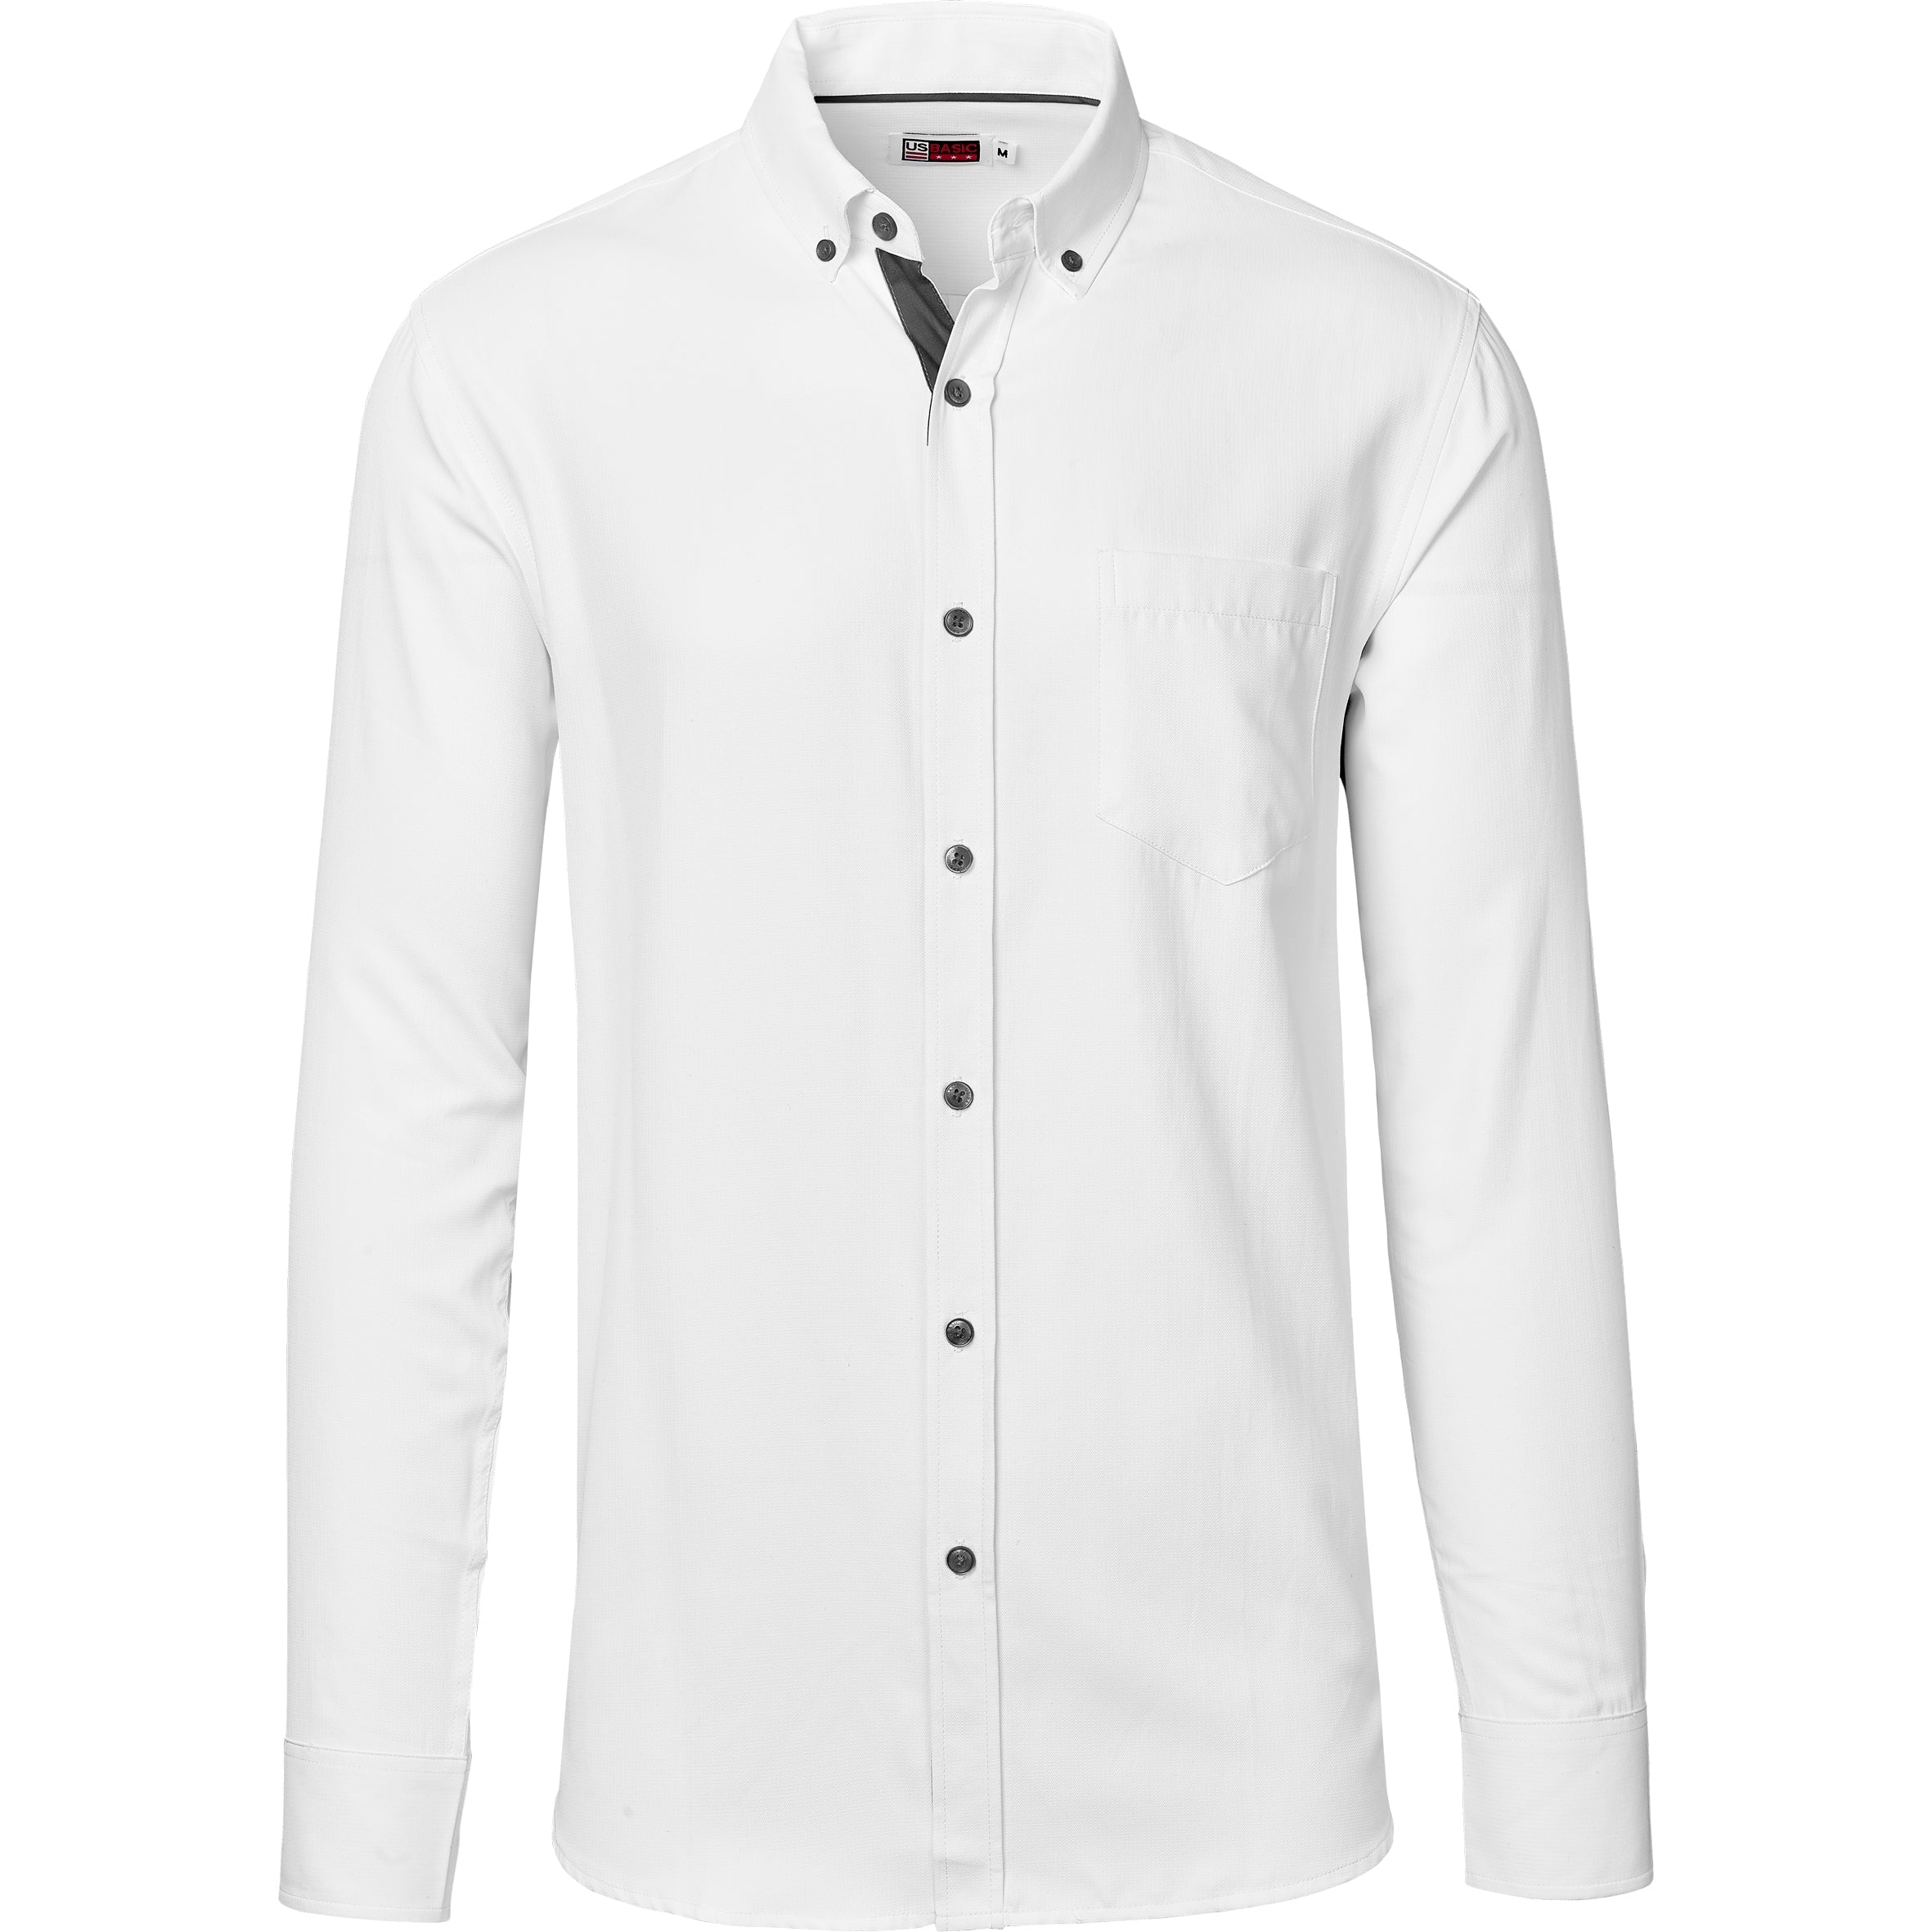 Mens Long Sleeve Casablanca Shirt - Navy Only-L-Charcoal-C